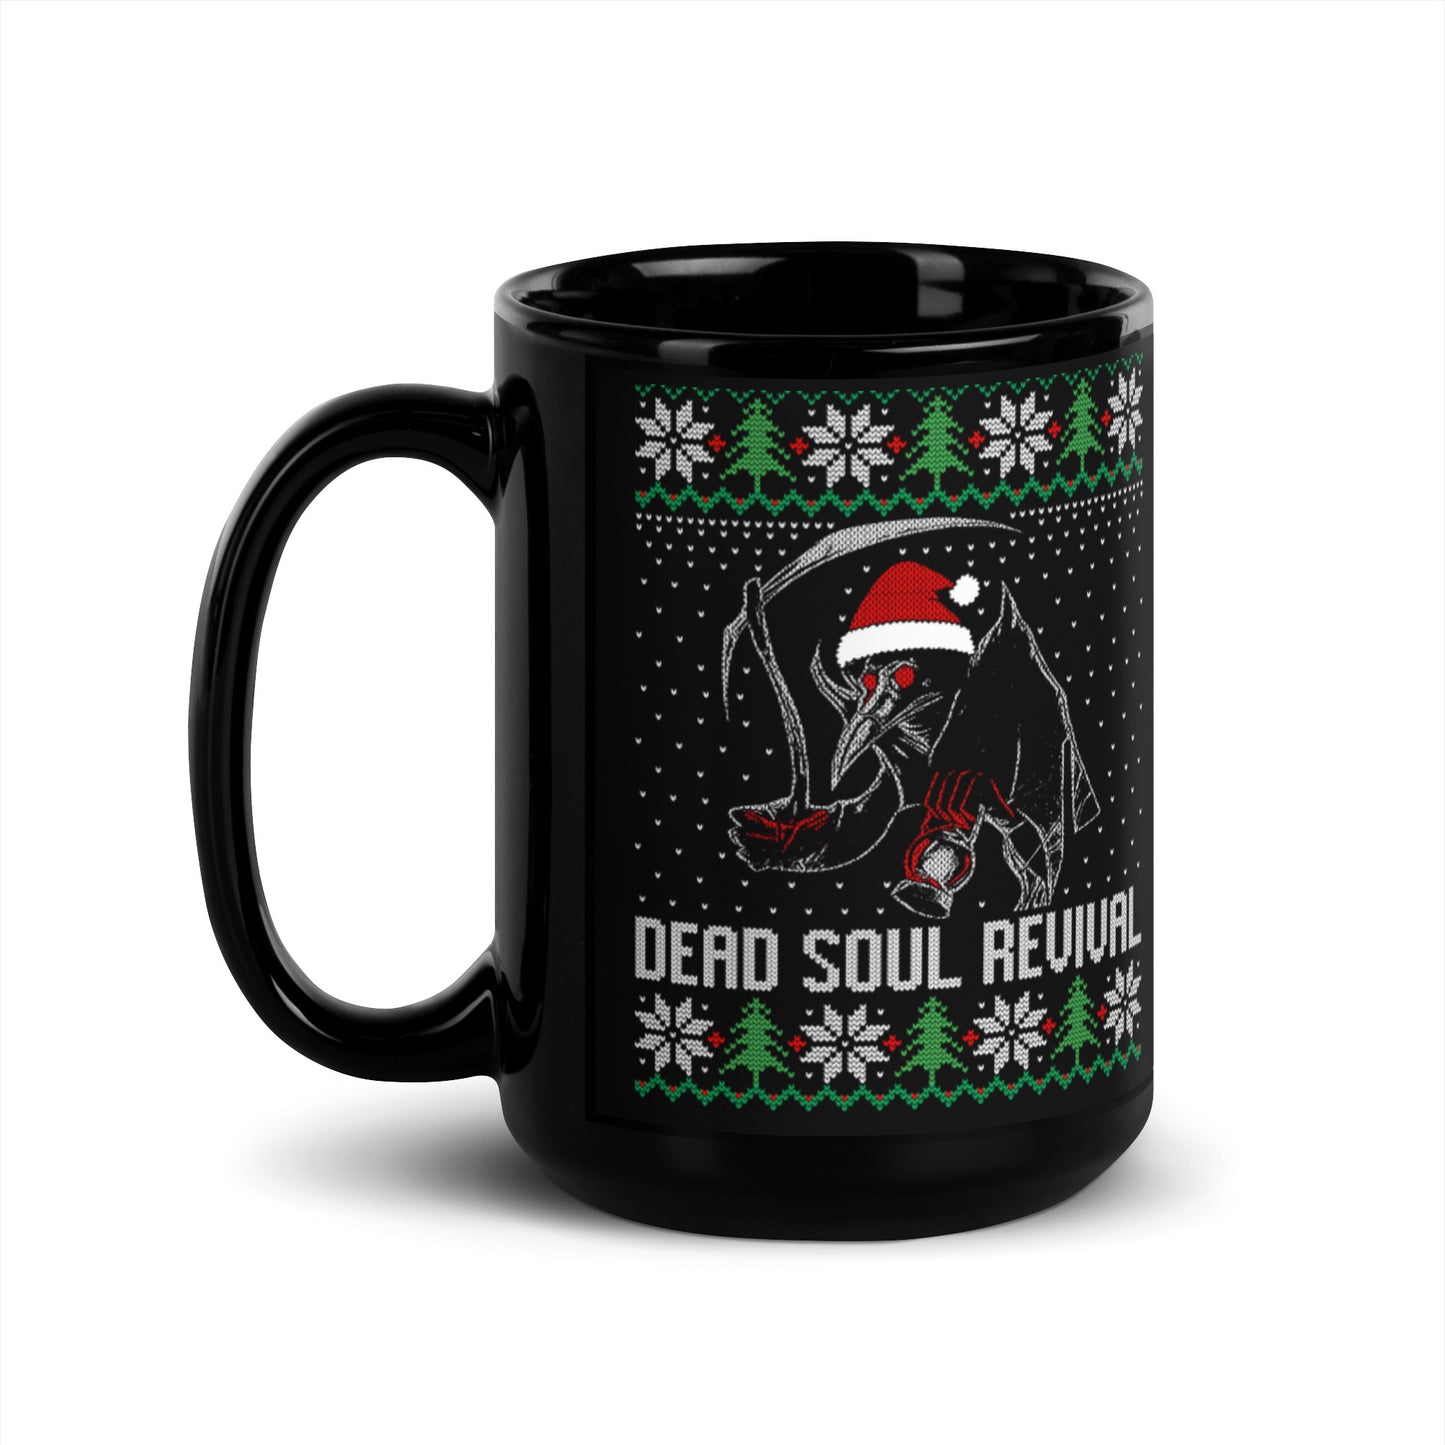 Dead Soul Revival Black Glossy Mug Ignite Cover